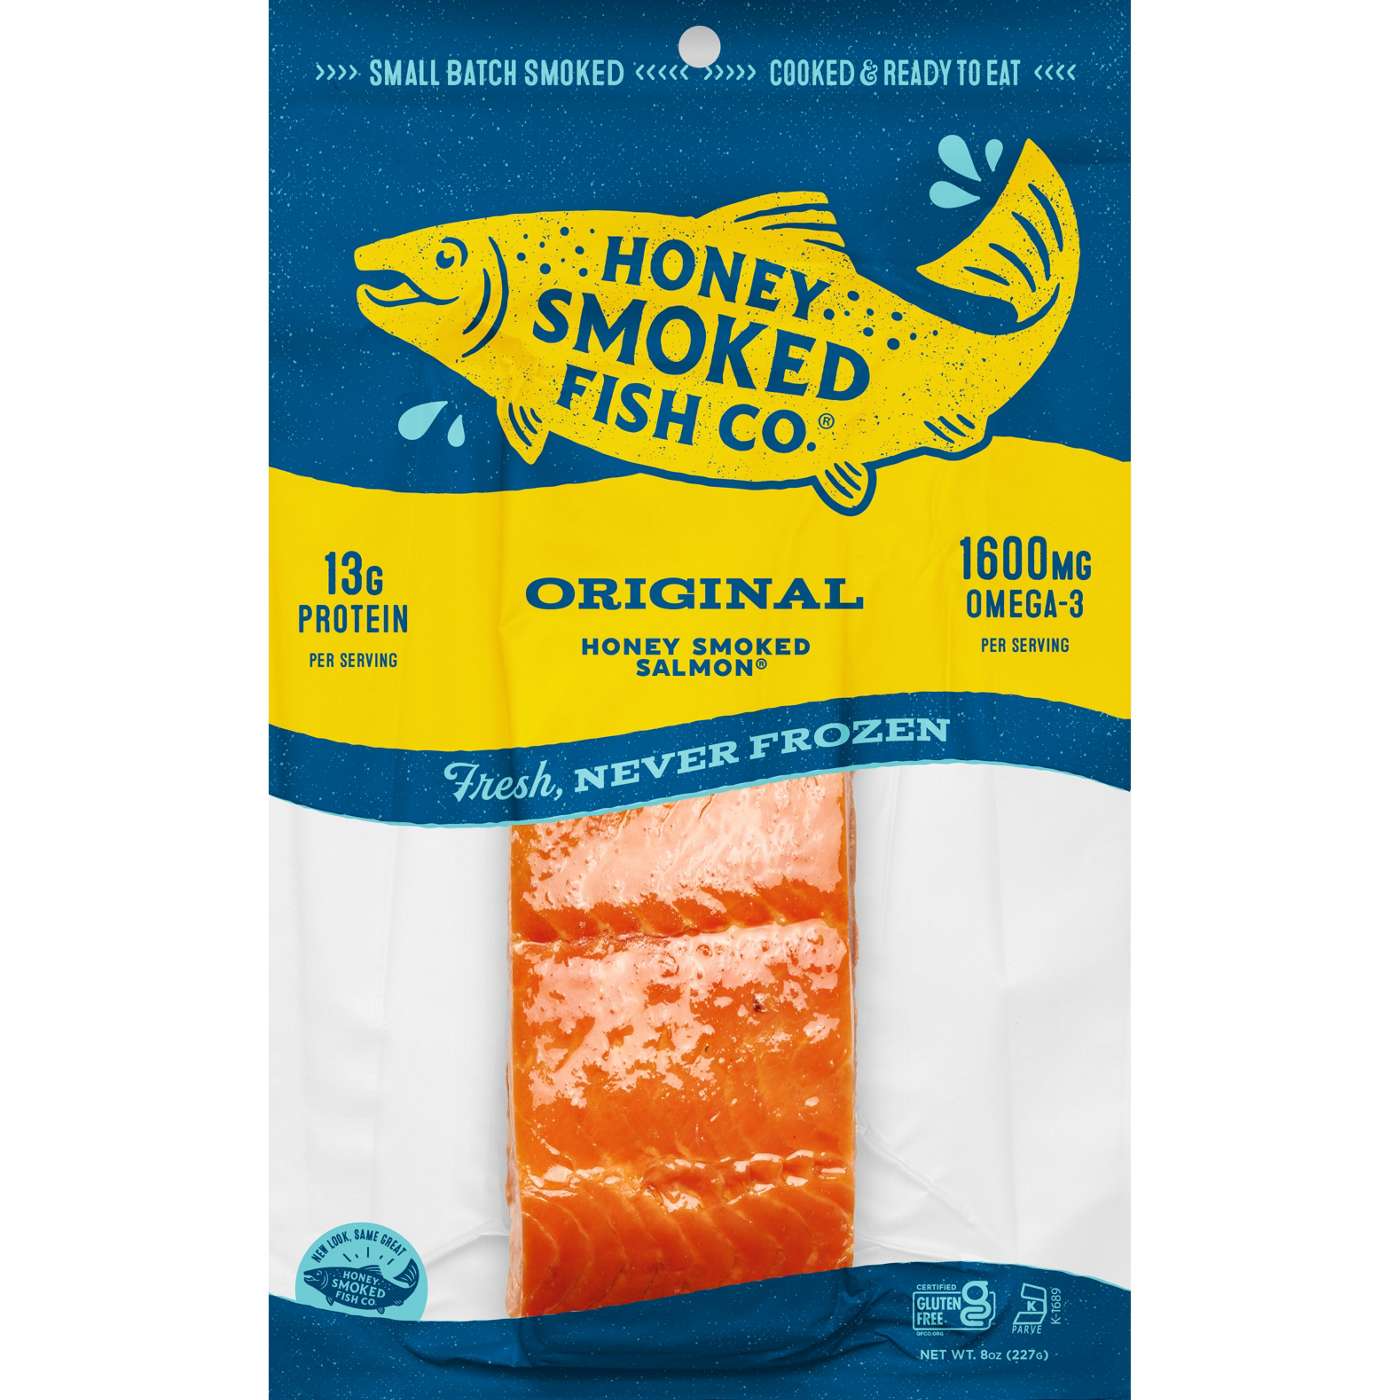 Honey Smoked Fish Co. Honey Smoked Salmon - Original; image 1 of 2